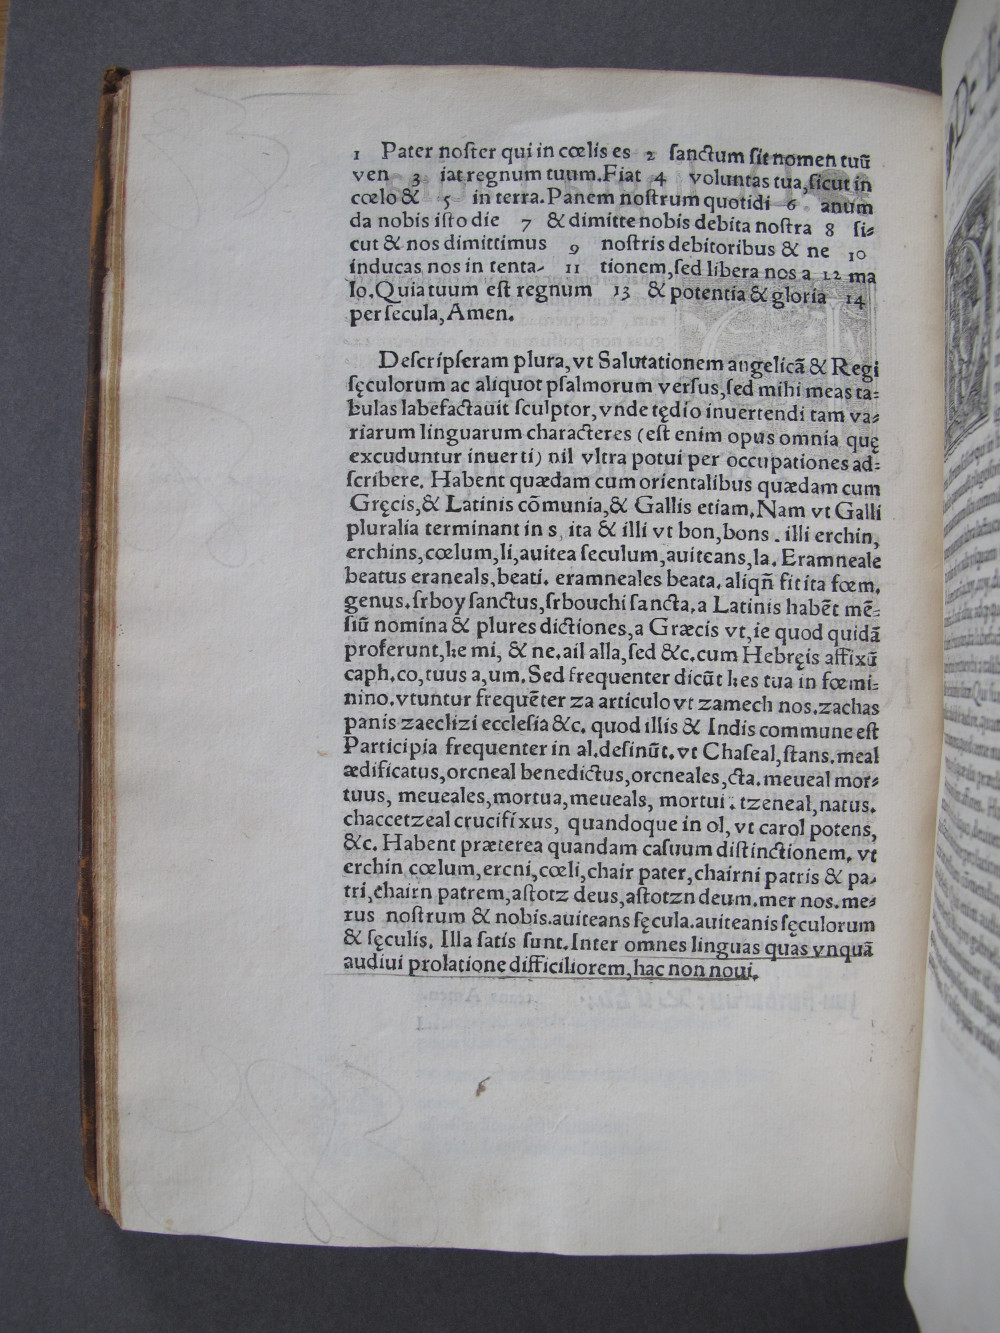 Folio I1 verso